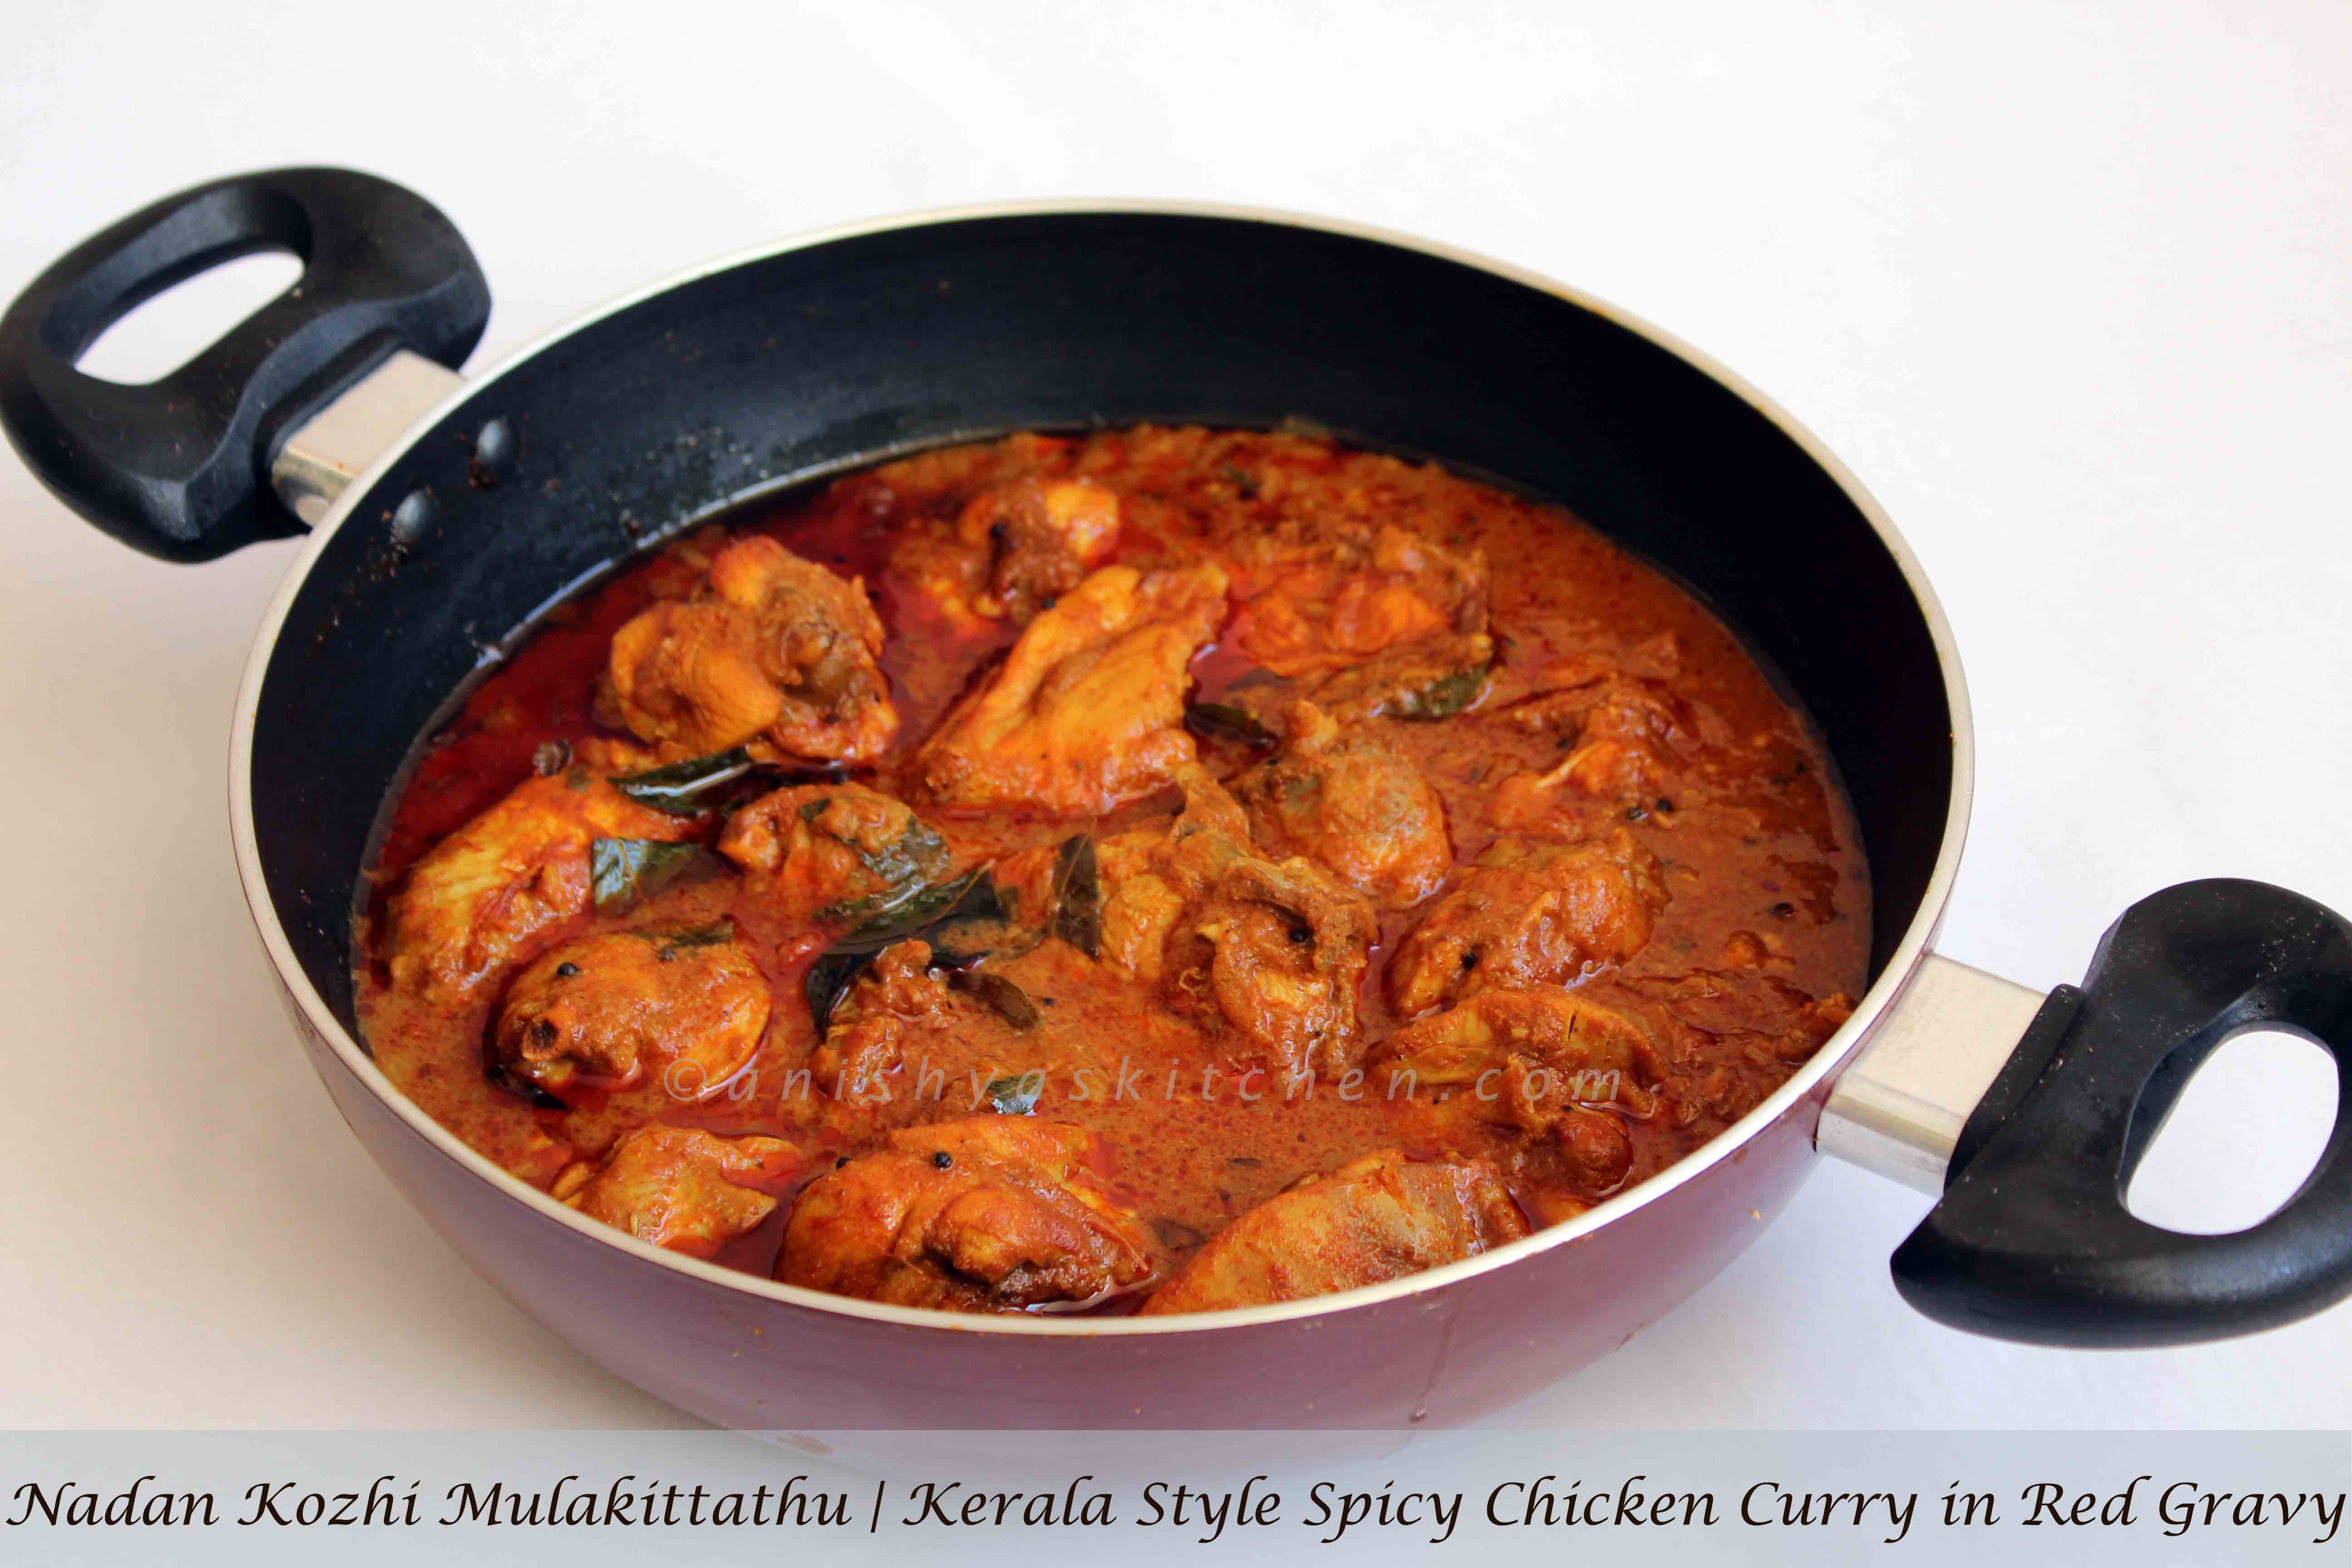 Nadan Kozhi Mulakittathu - Kerala Style Spicy Chicken Curry in Red Gravy